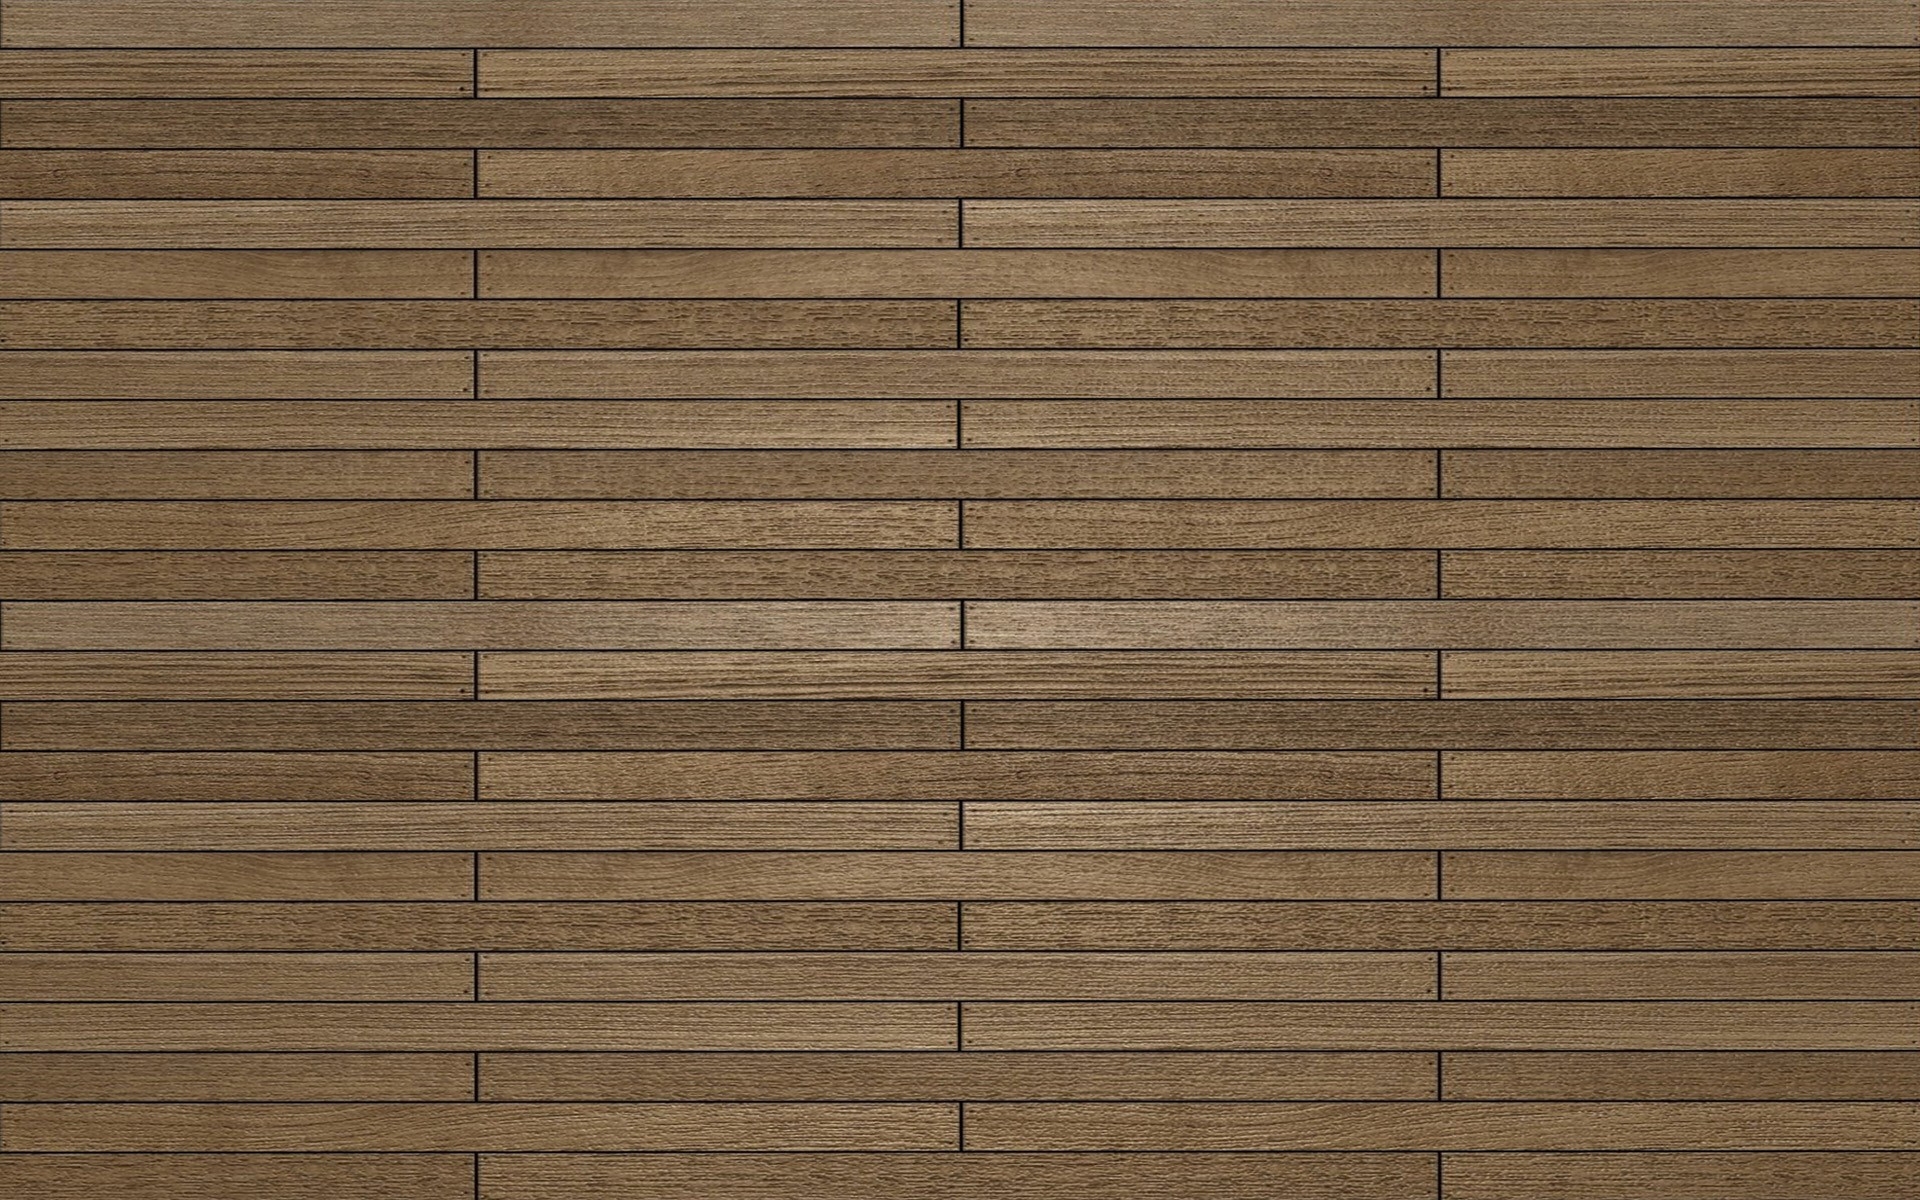 22 Fashionable Hardwood Floor Layout Pattern  Unique Flooring Ideas